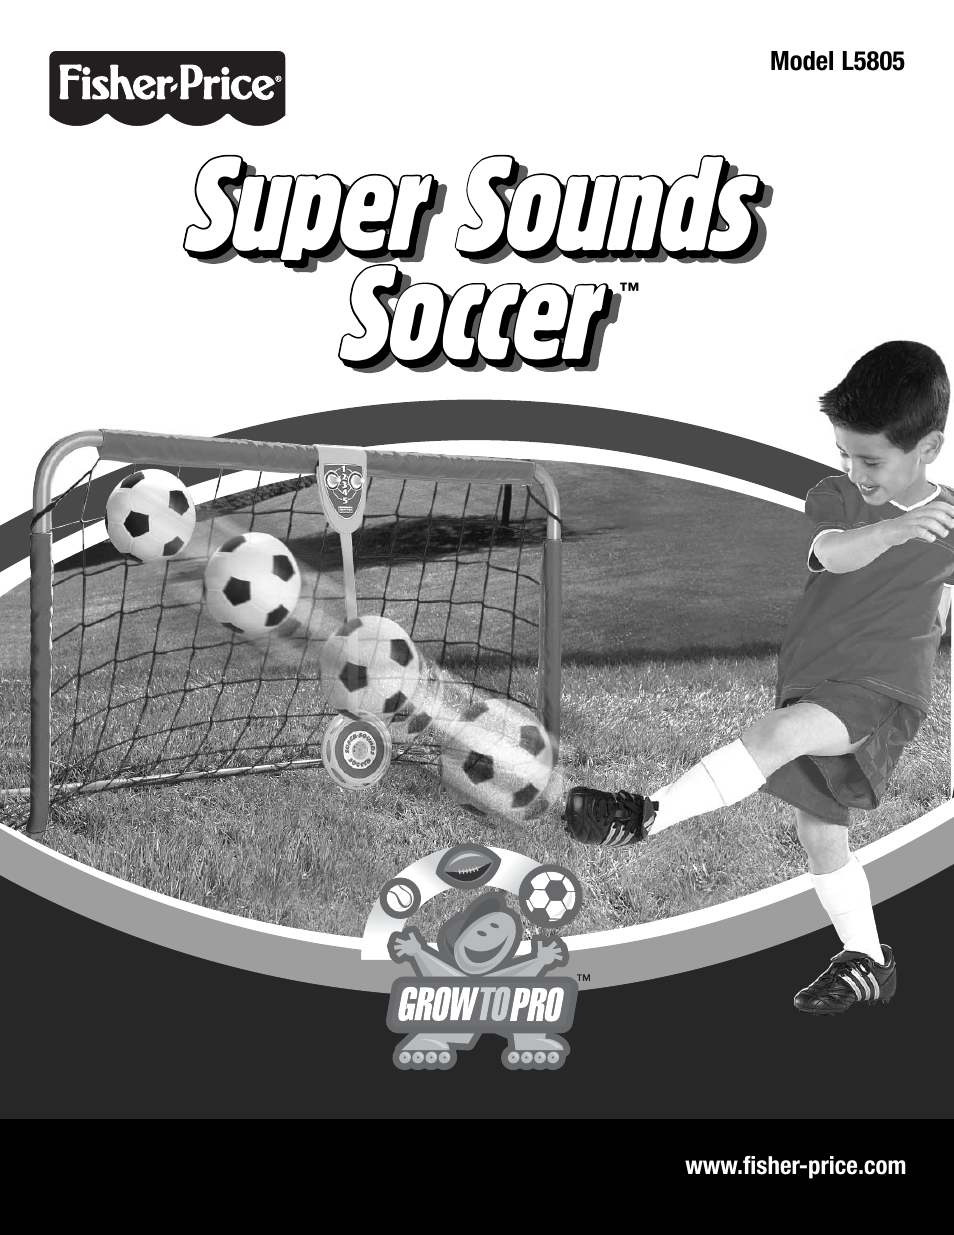 SUPER SOUNDS SOCCER L5805